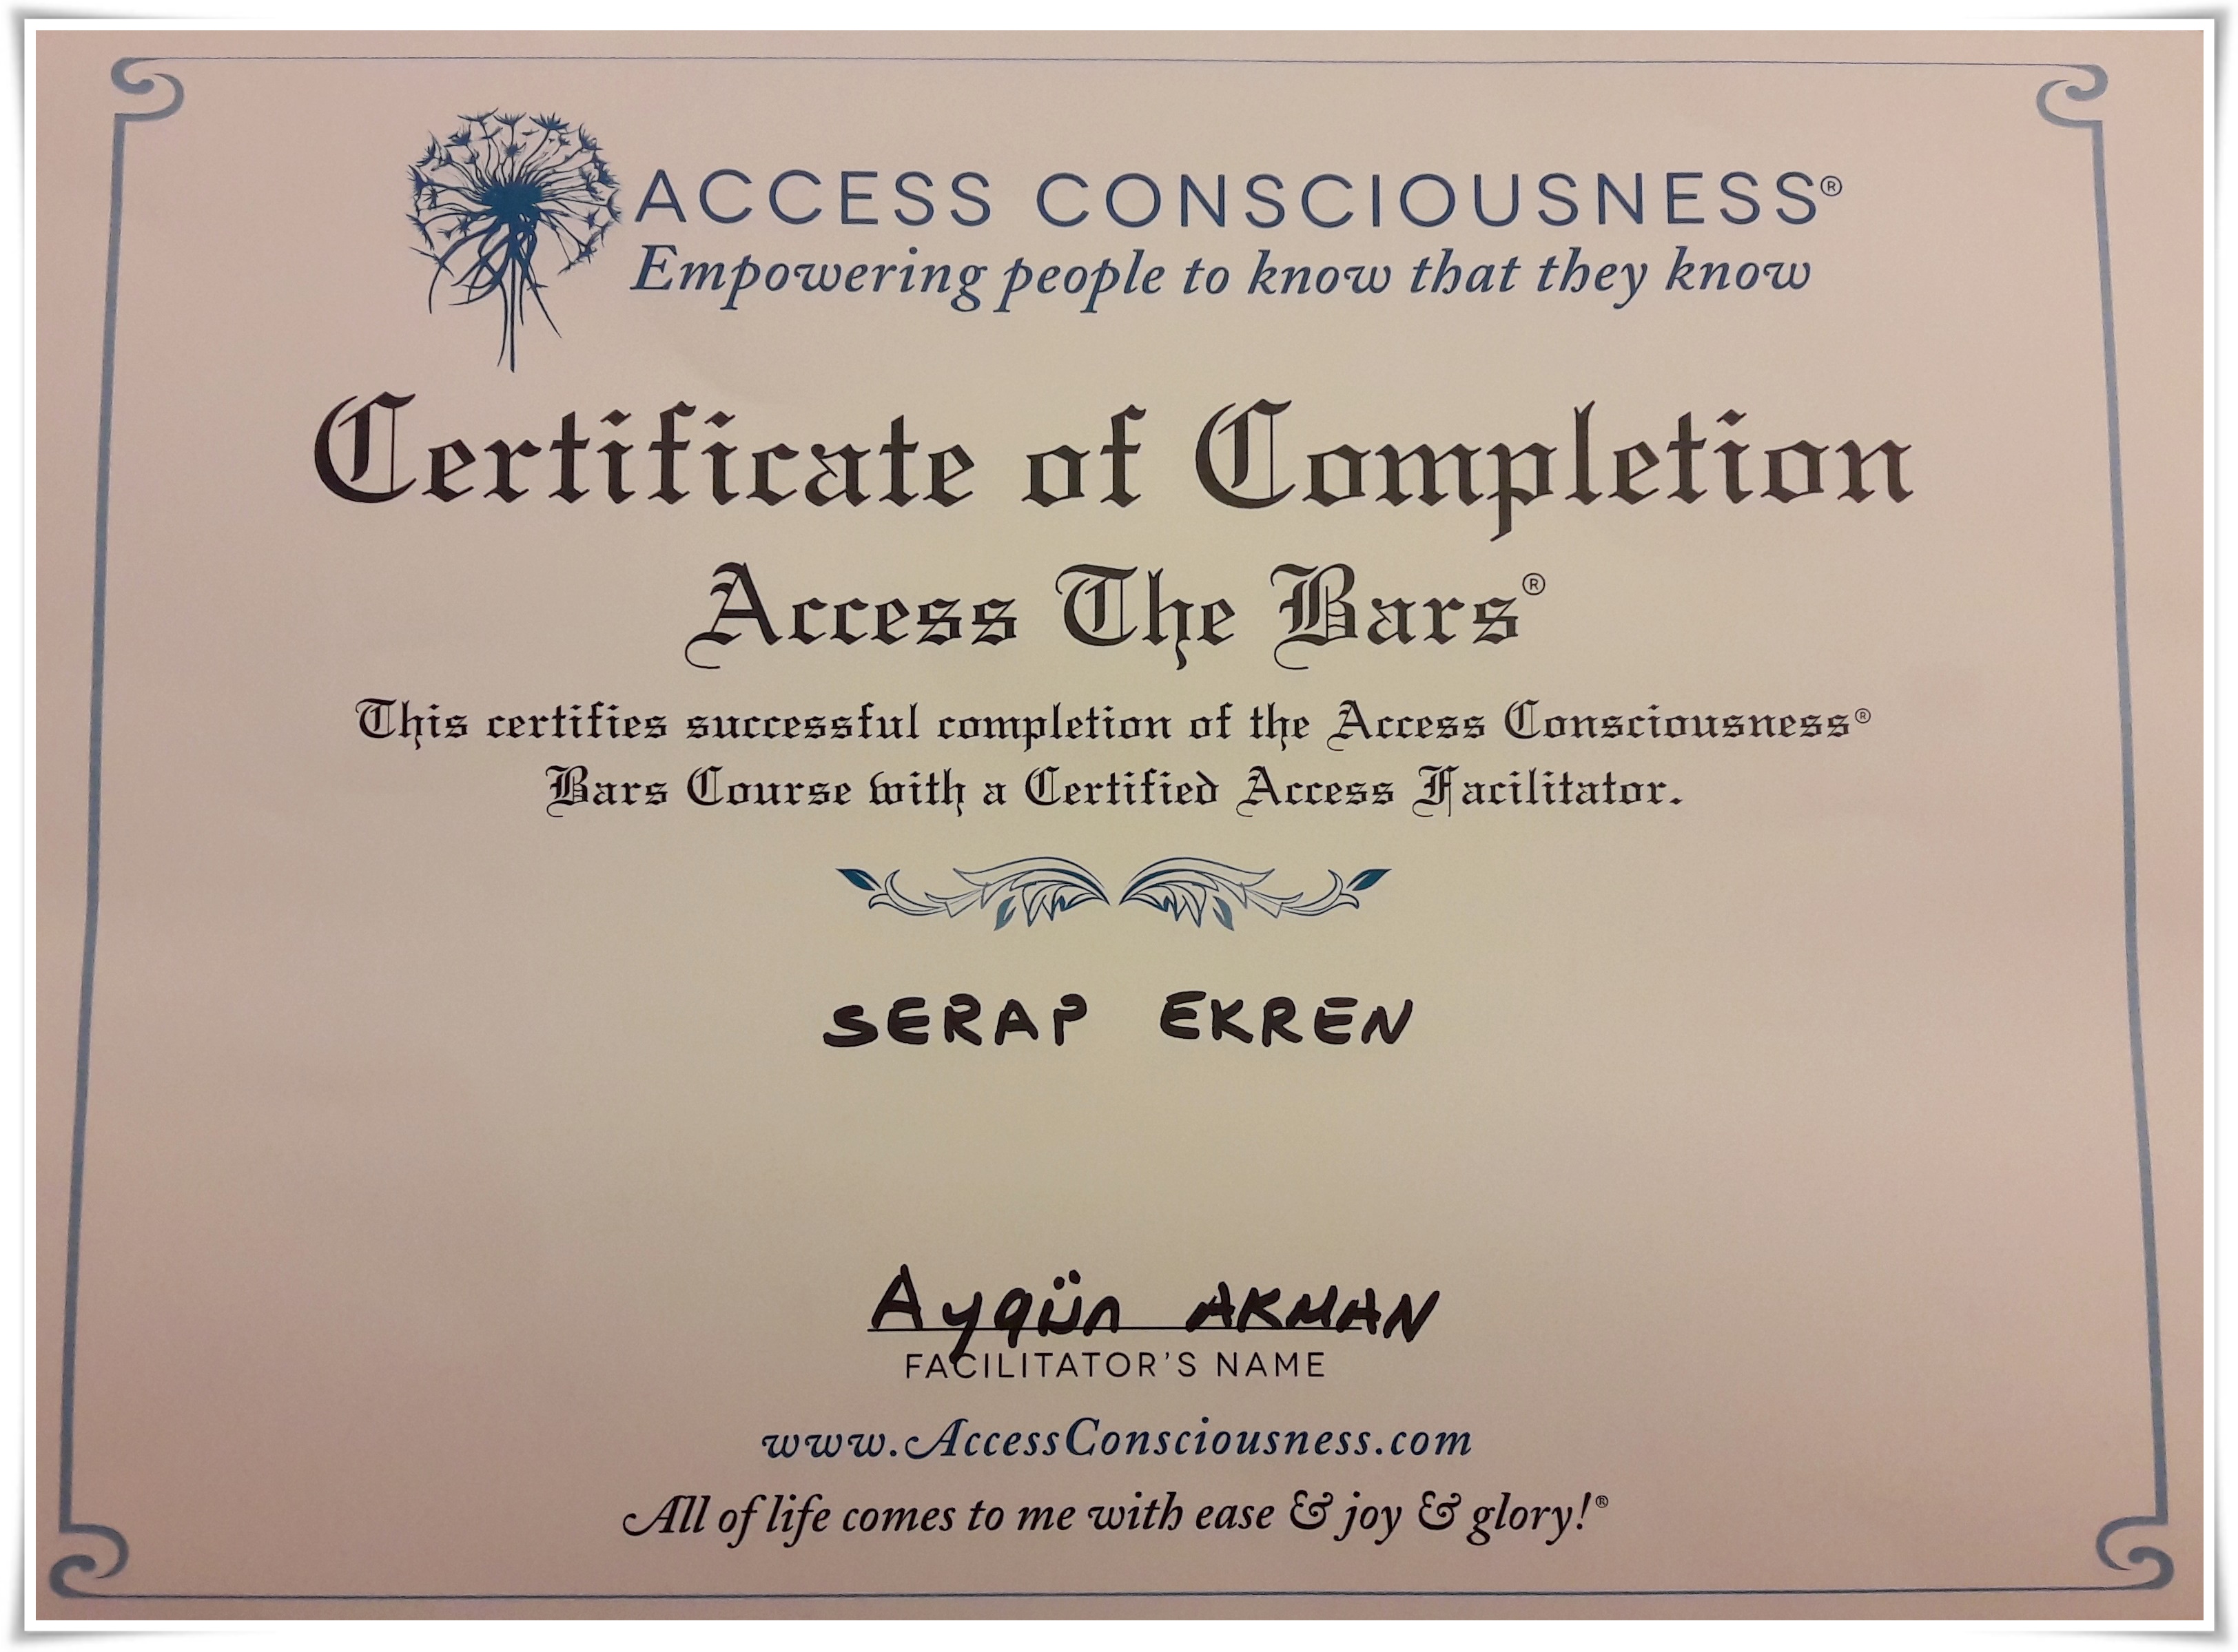 Access consciousness